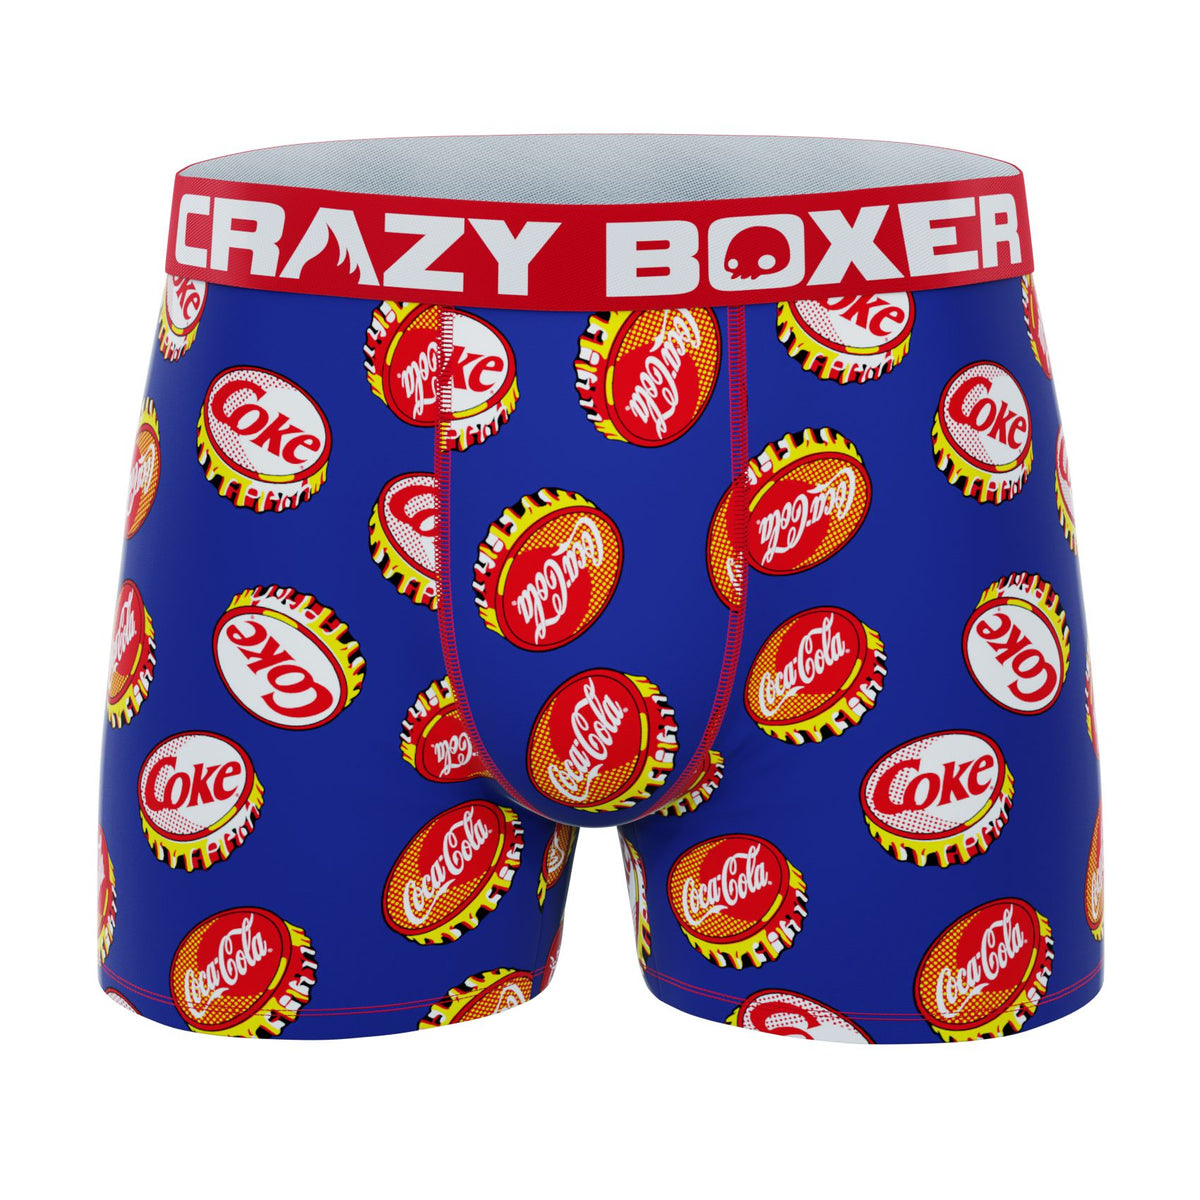 CRAZYBOXER Coca Cola Caps Men's Boxer Briefs